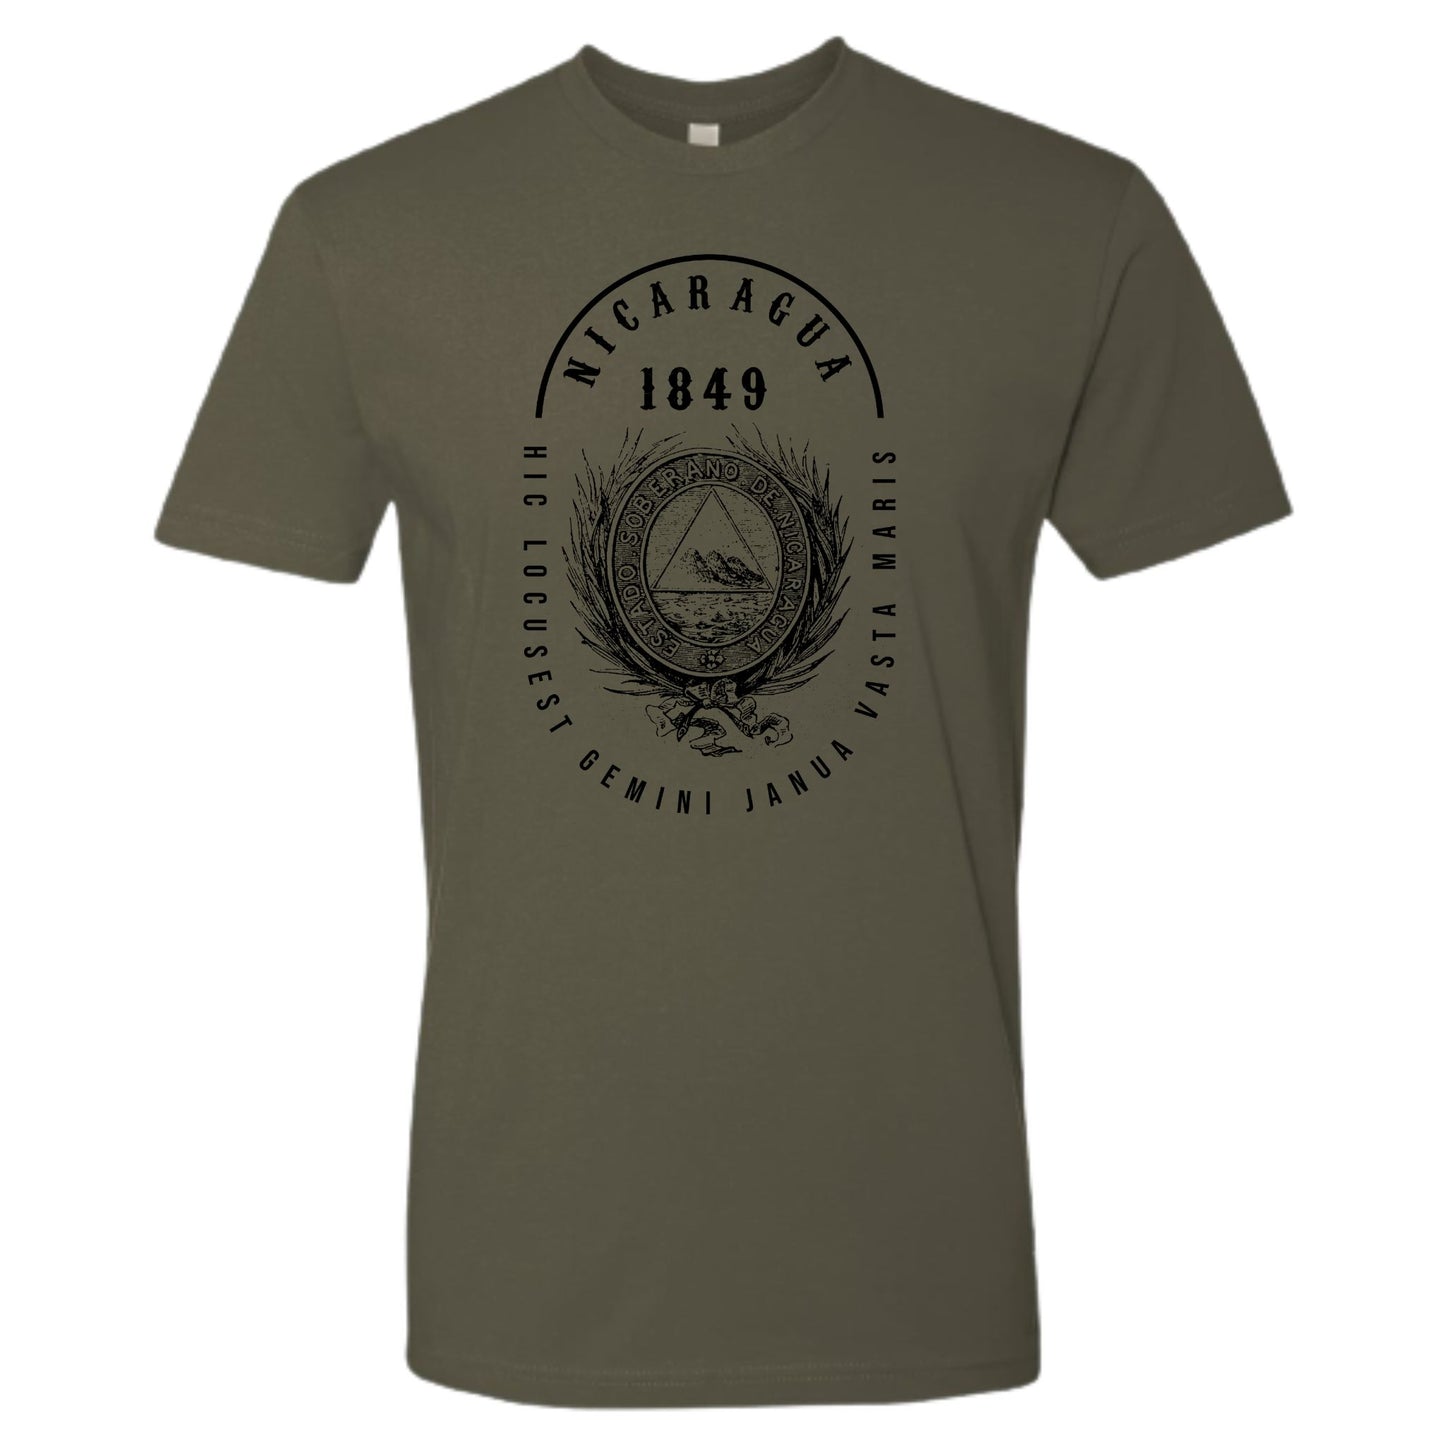 Nicaragua 1849 Simple T-shirt